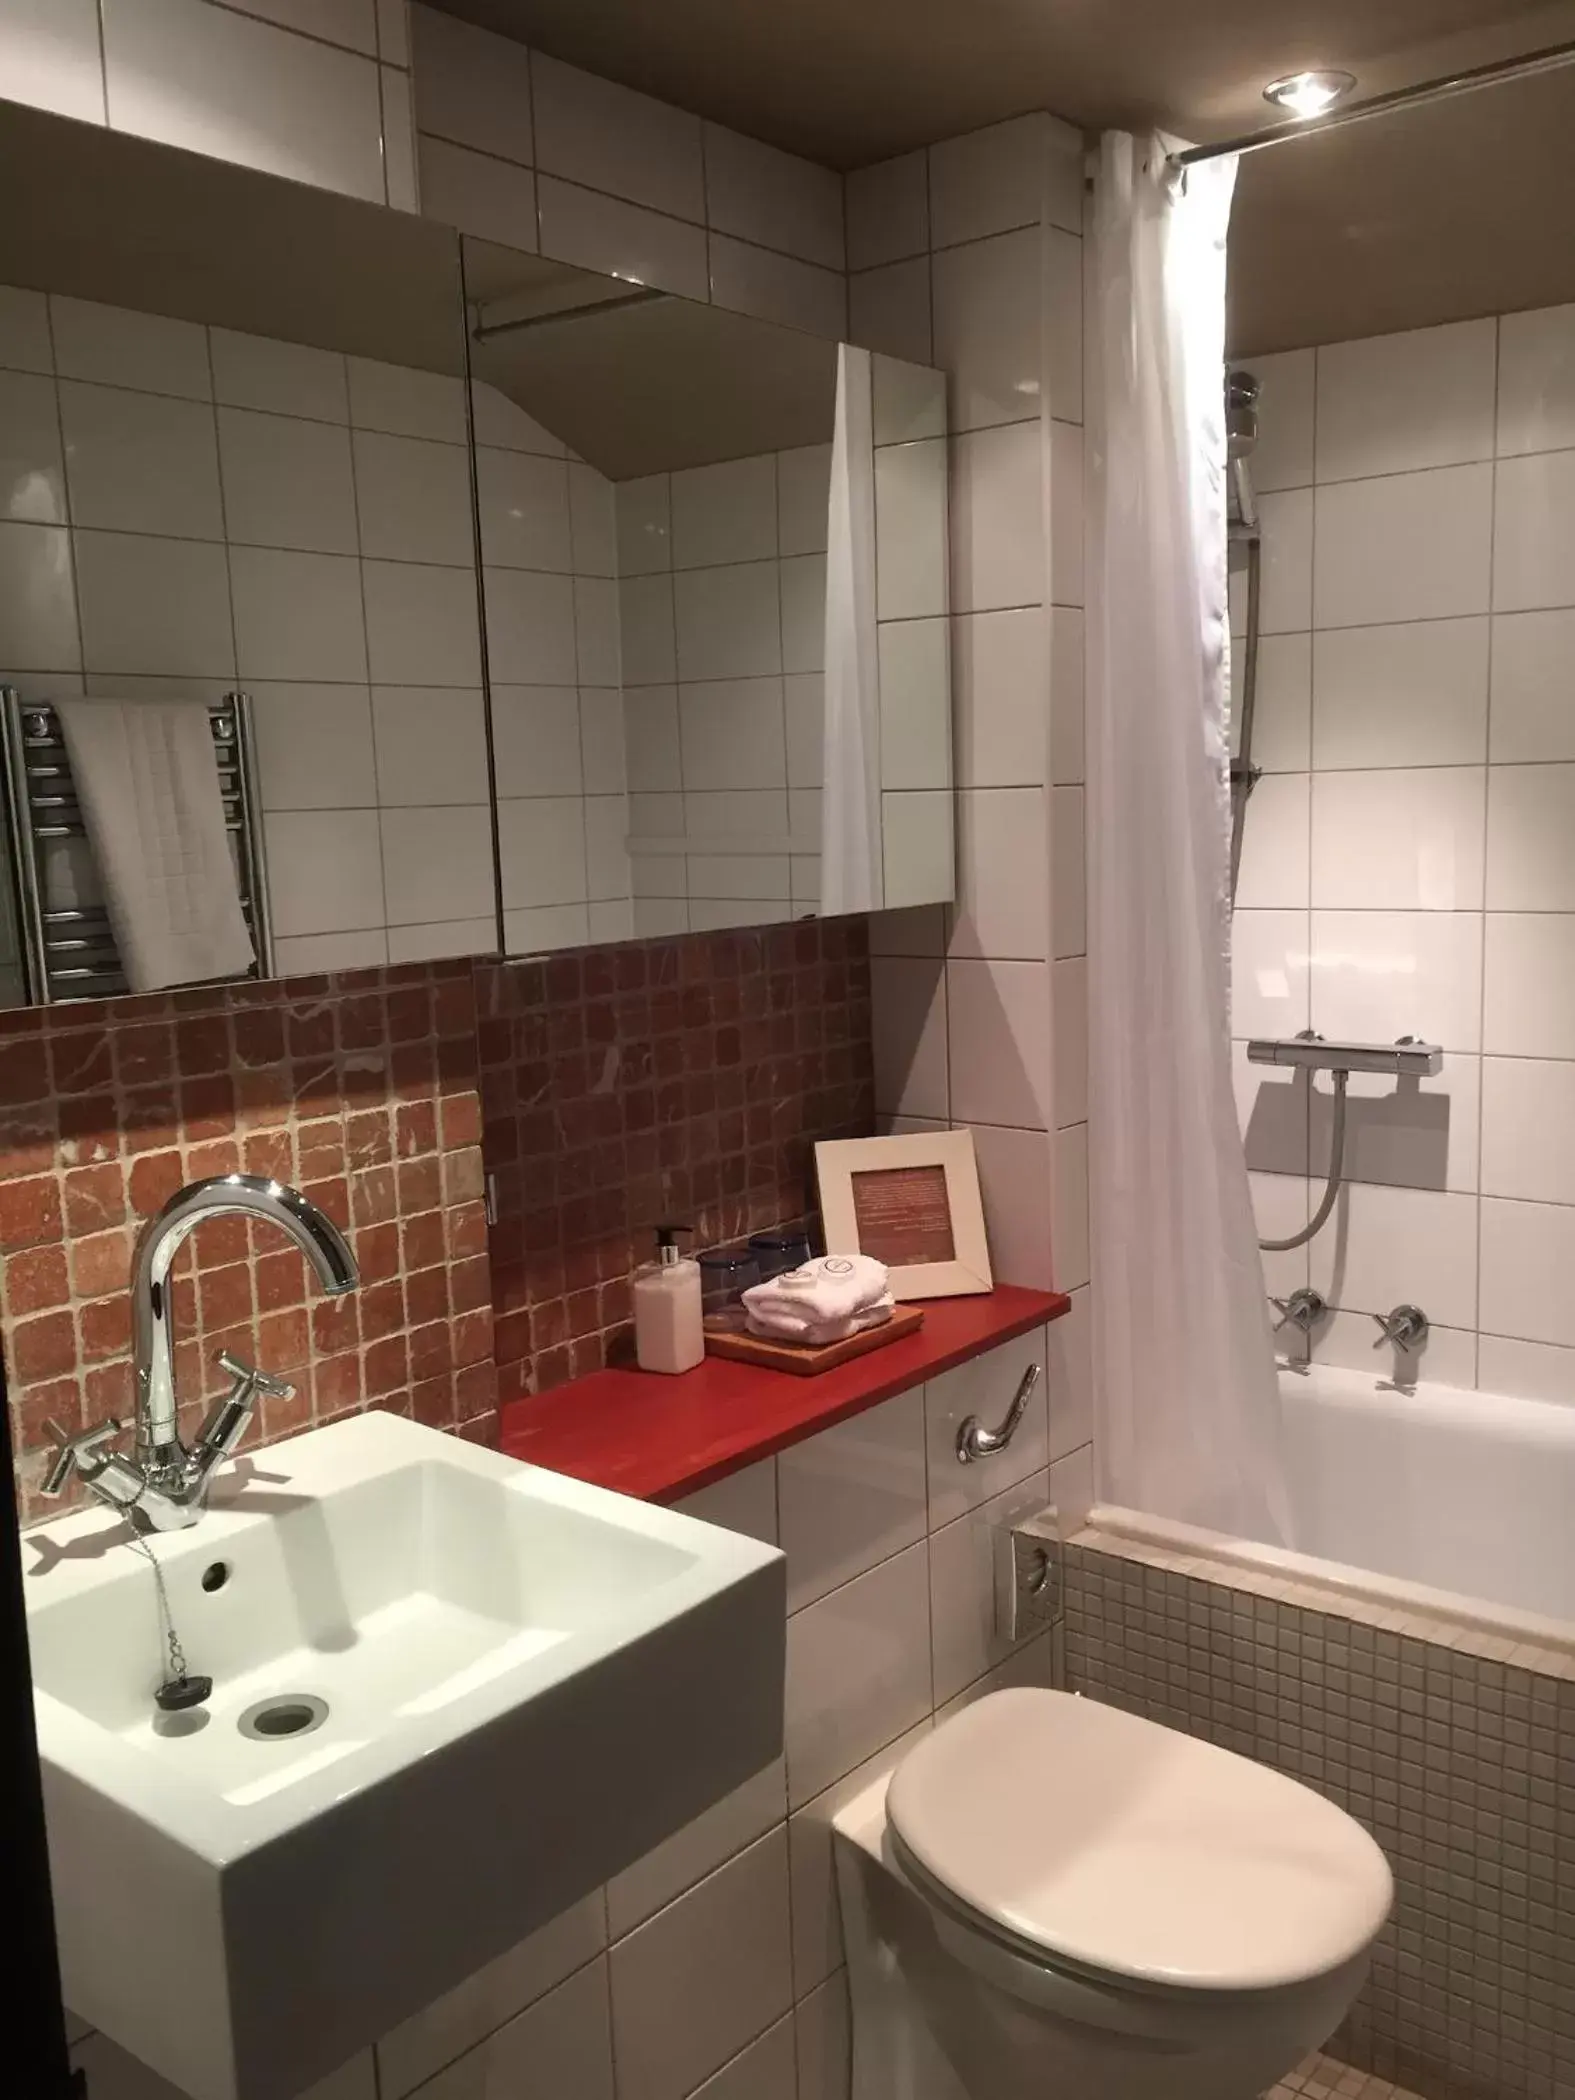 Bathroom in manorhaus RUTHIN - manorhaus collection